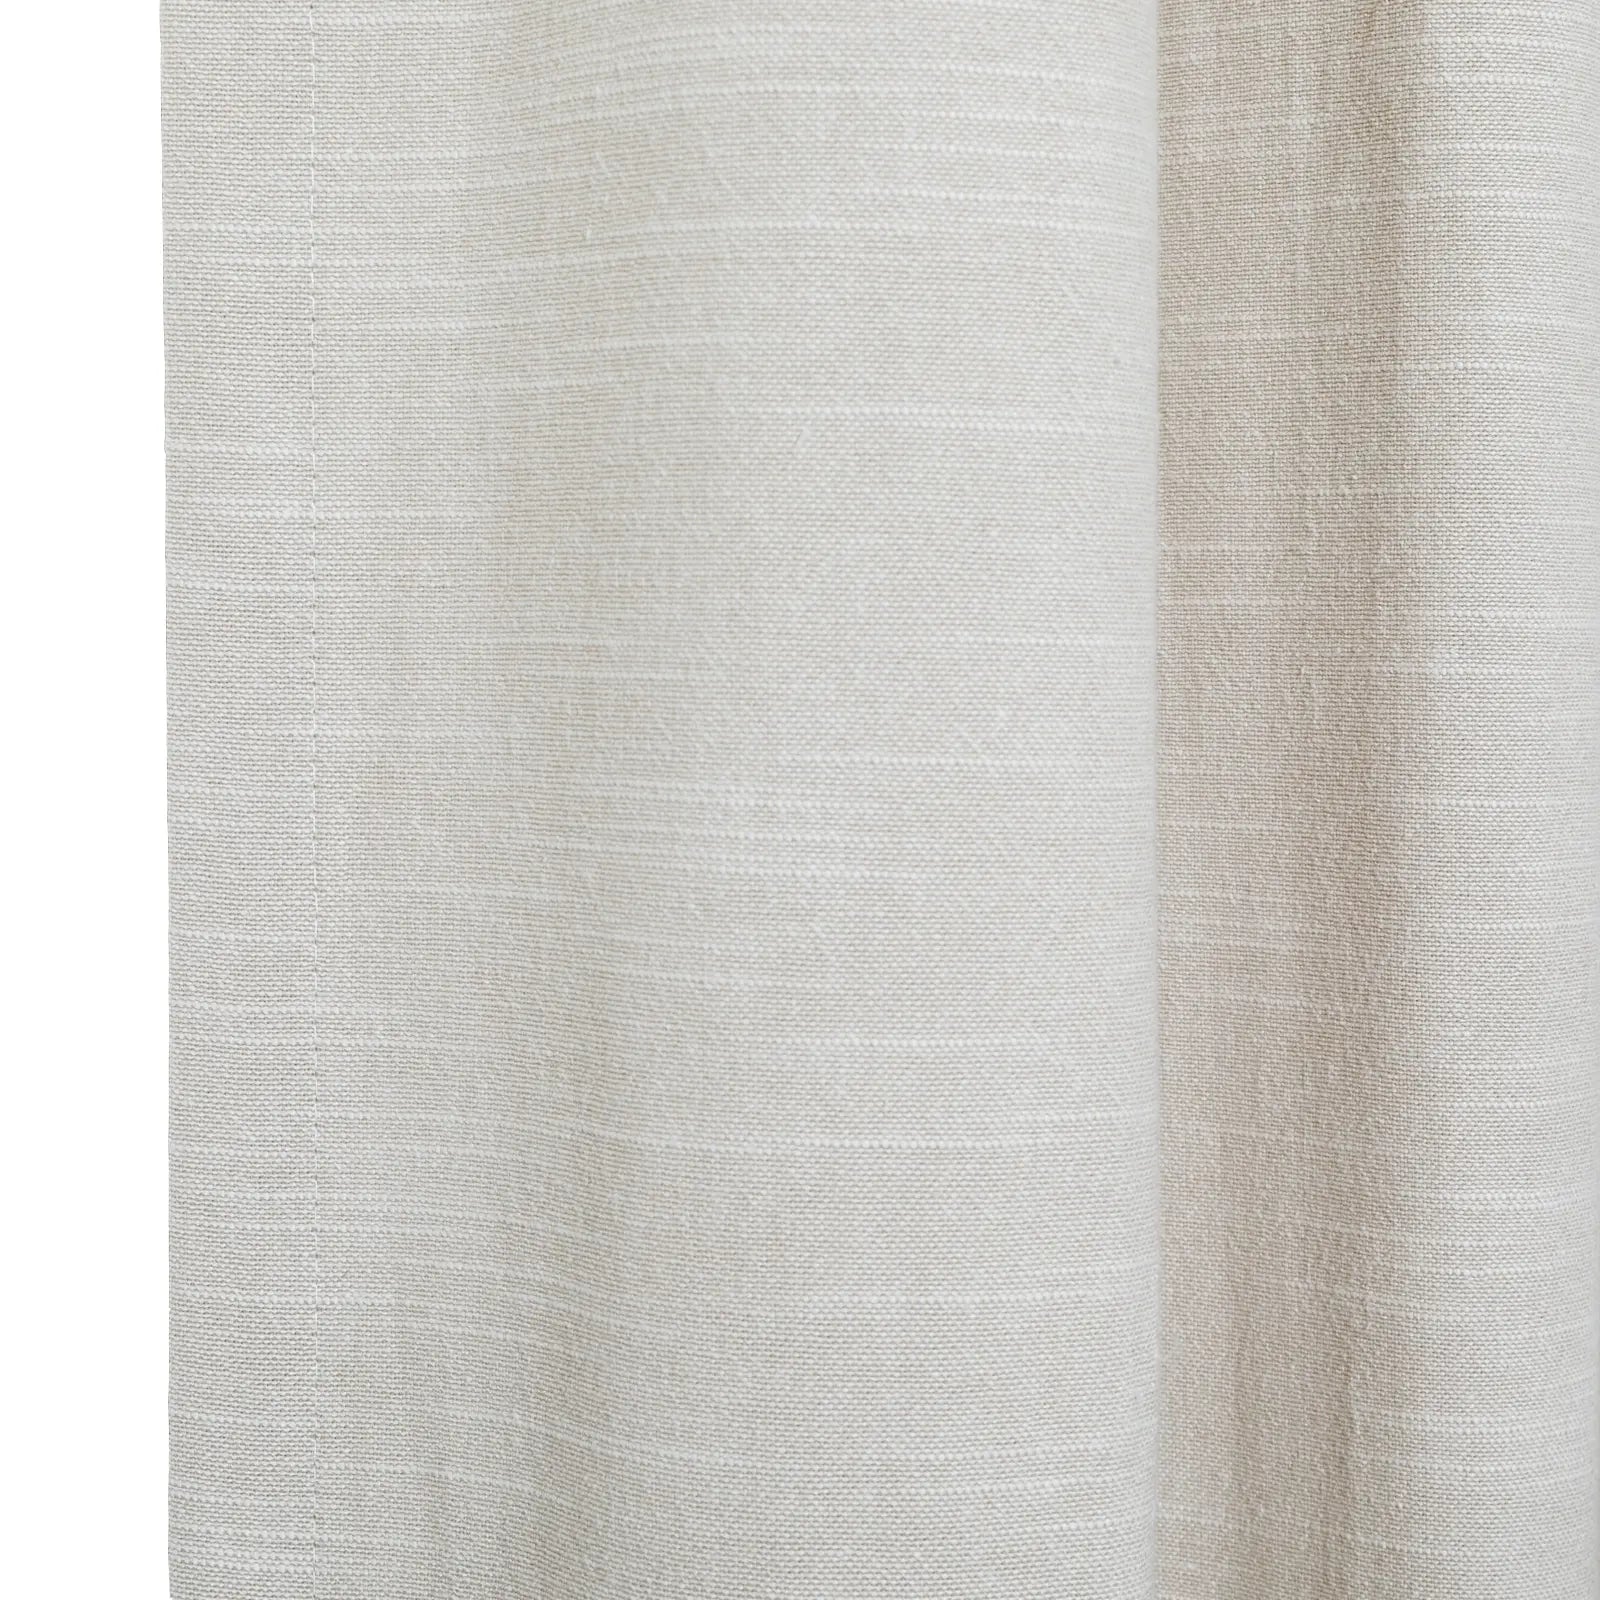 Aira Luxury Linen Cotton Eyelet Curtain, Blackout, Bedroom Eyelet 